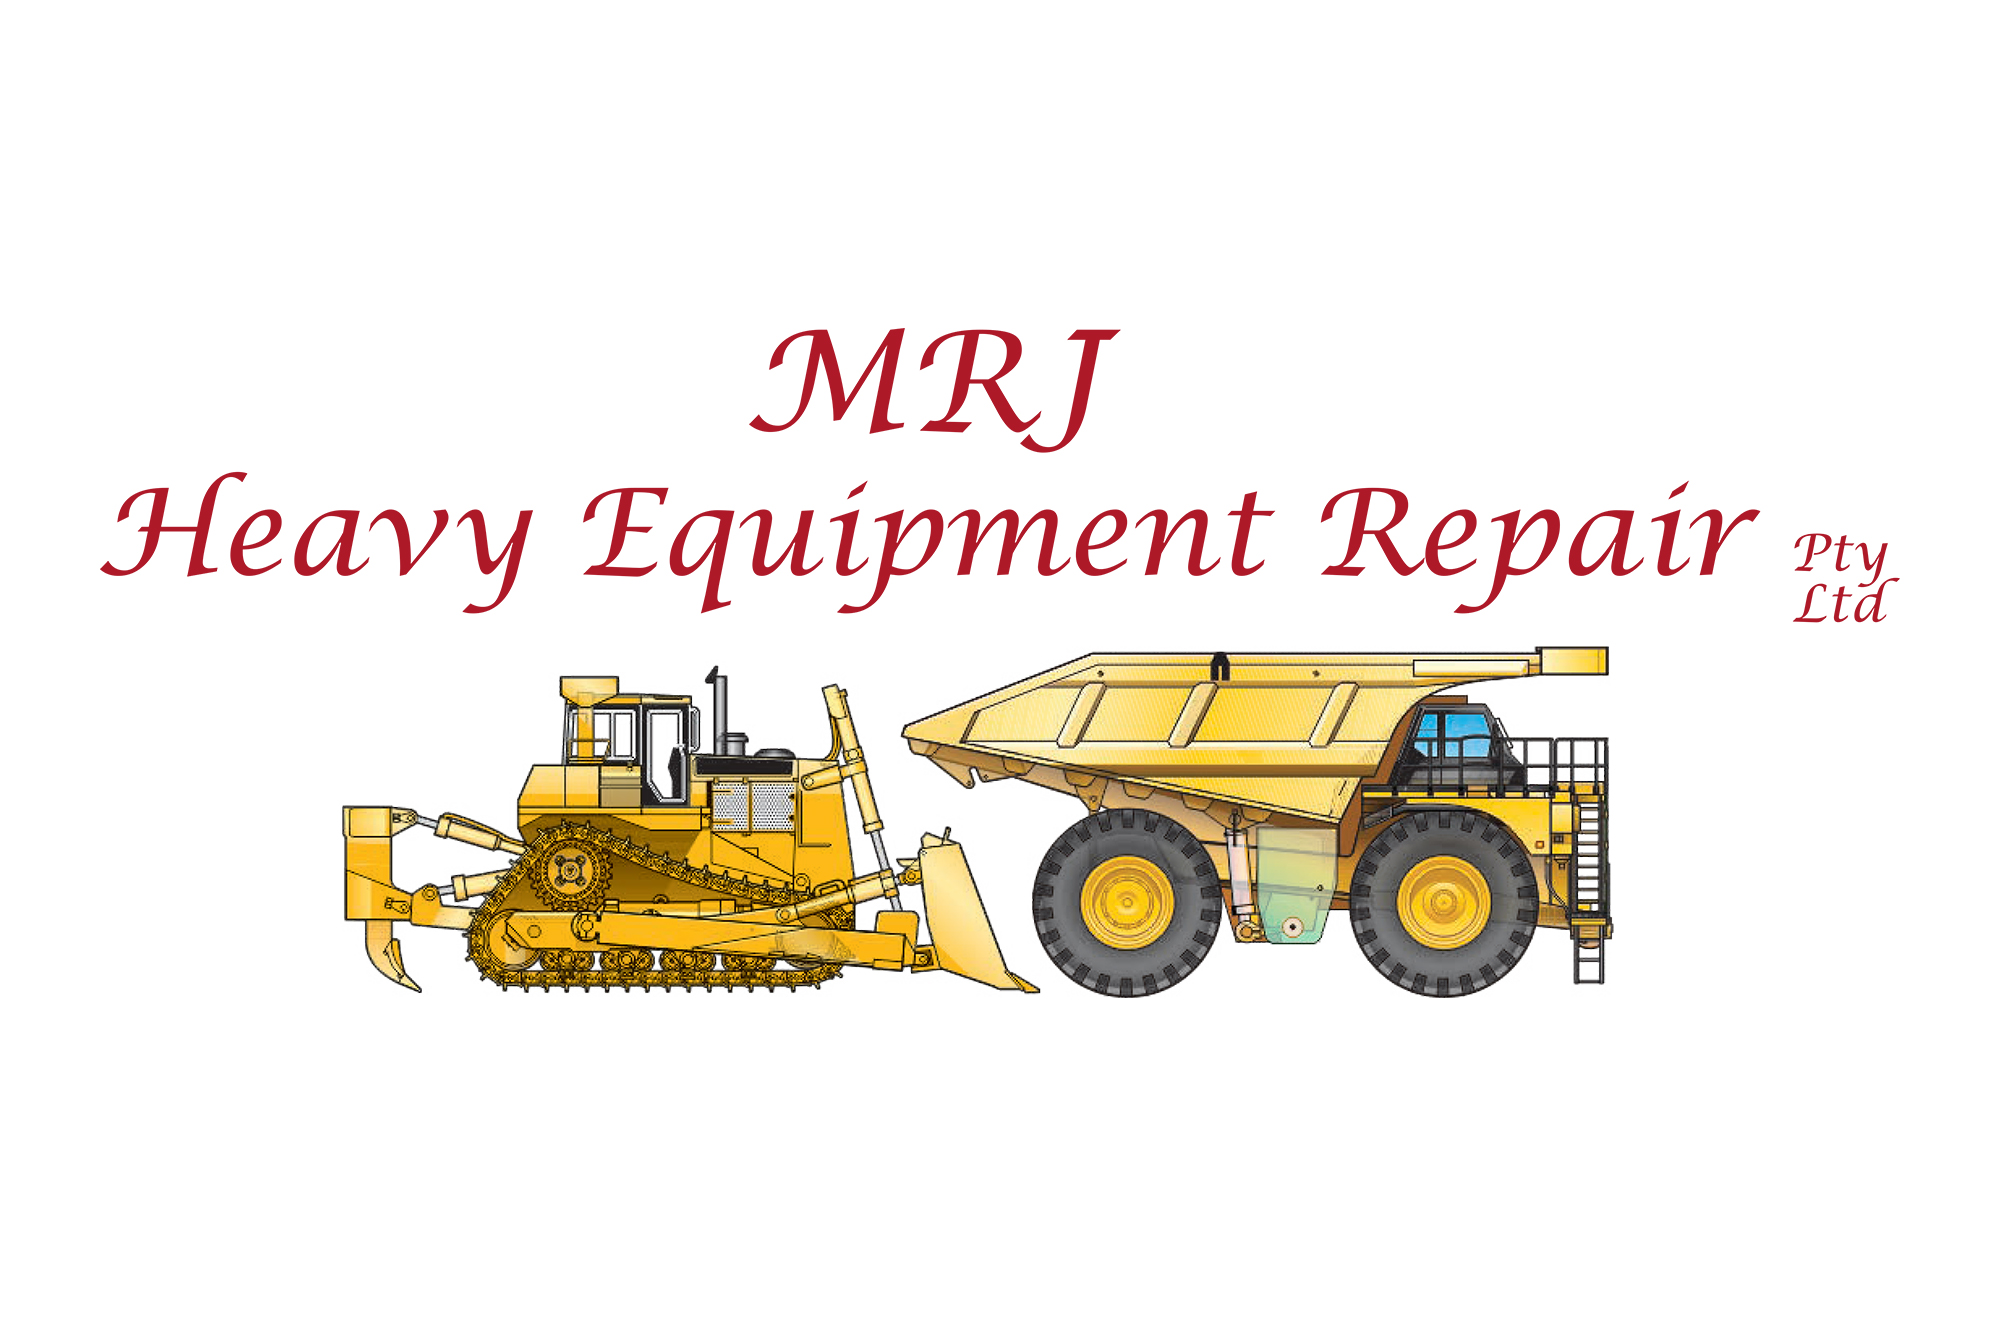 MRJ Heavy Equipment Repair